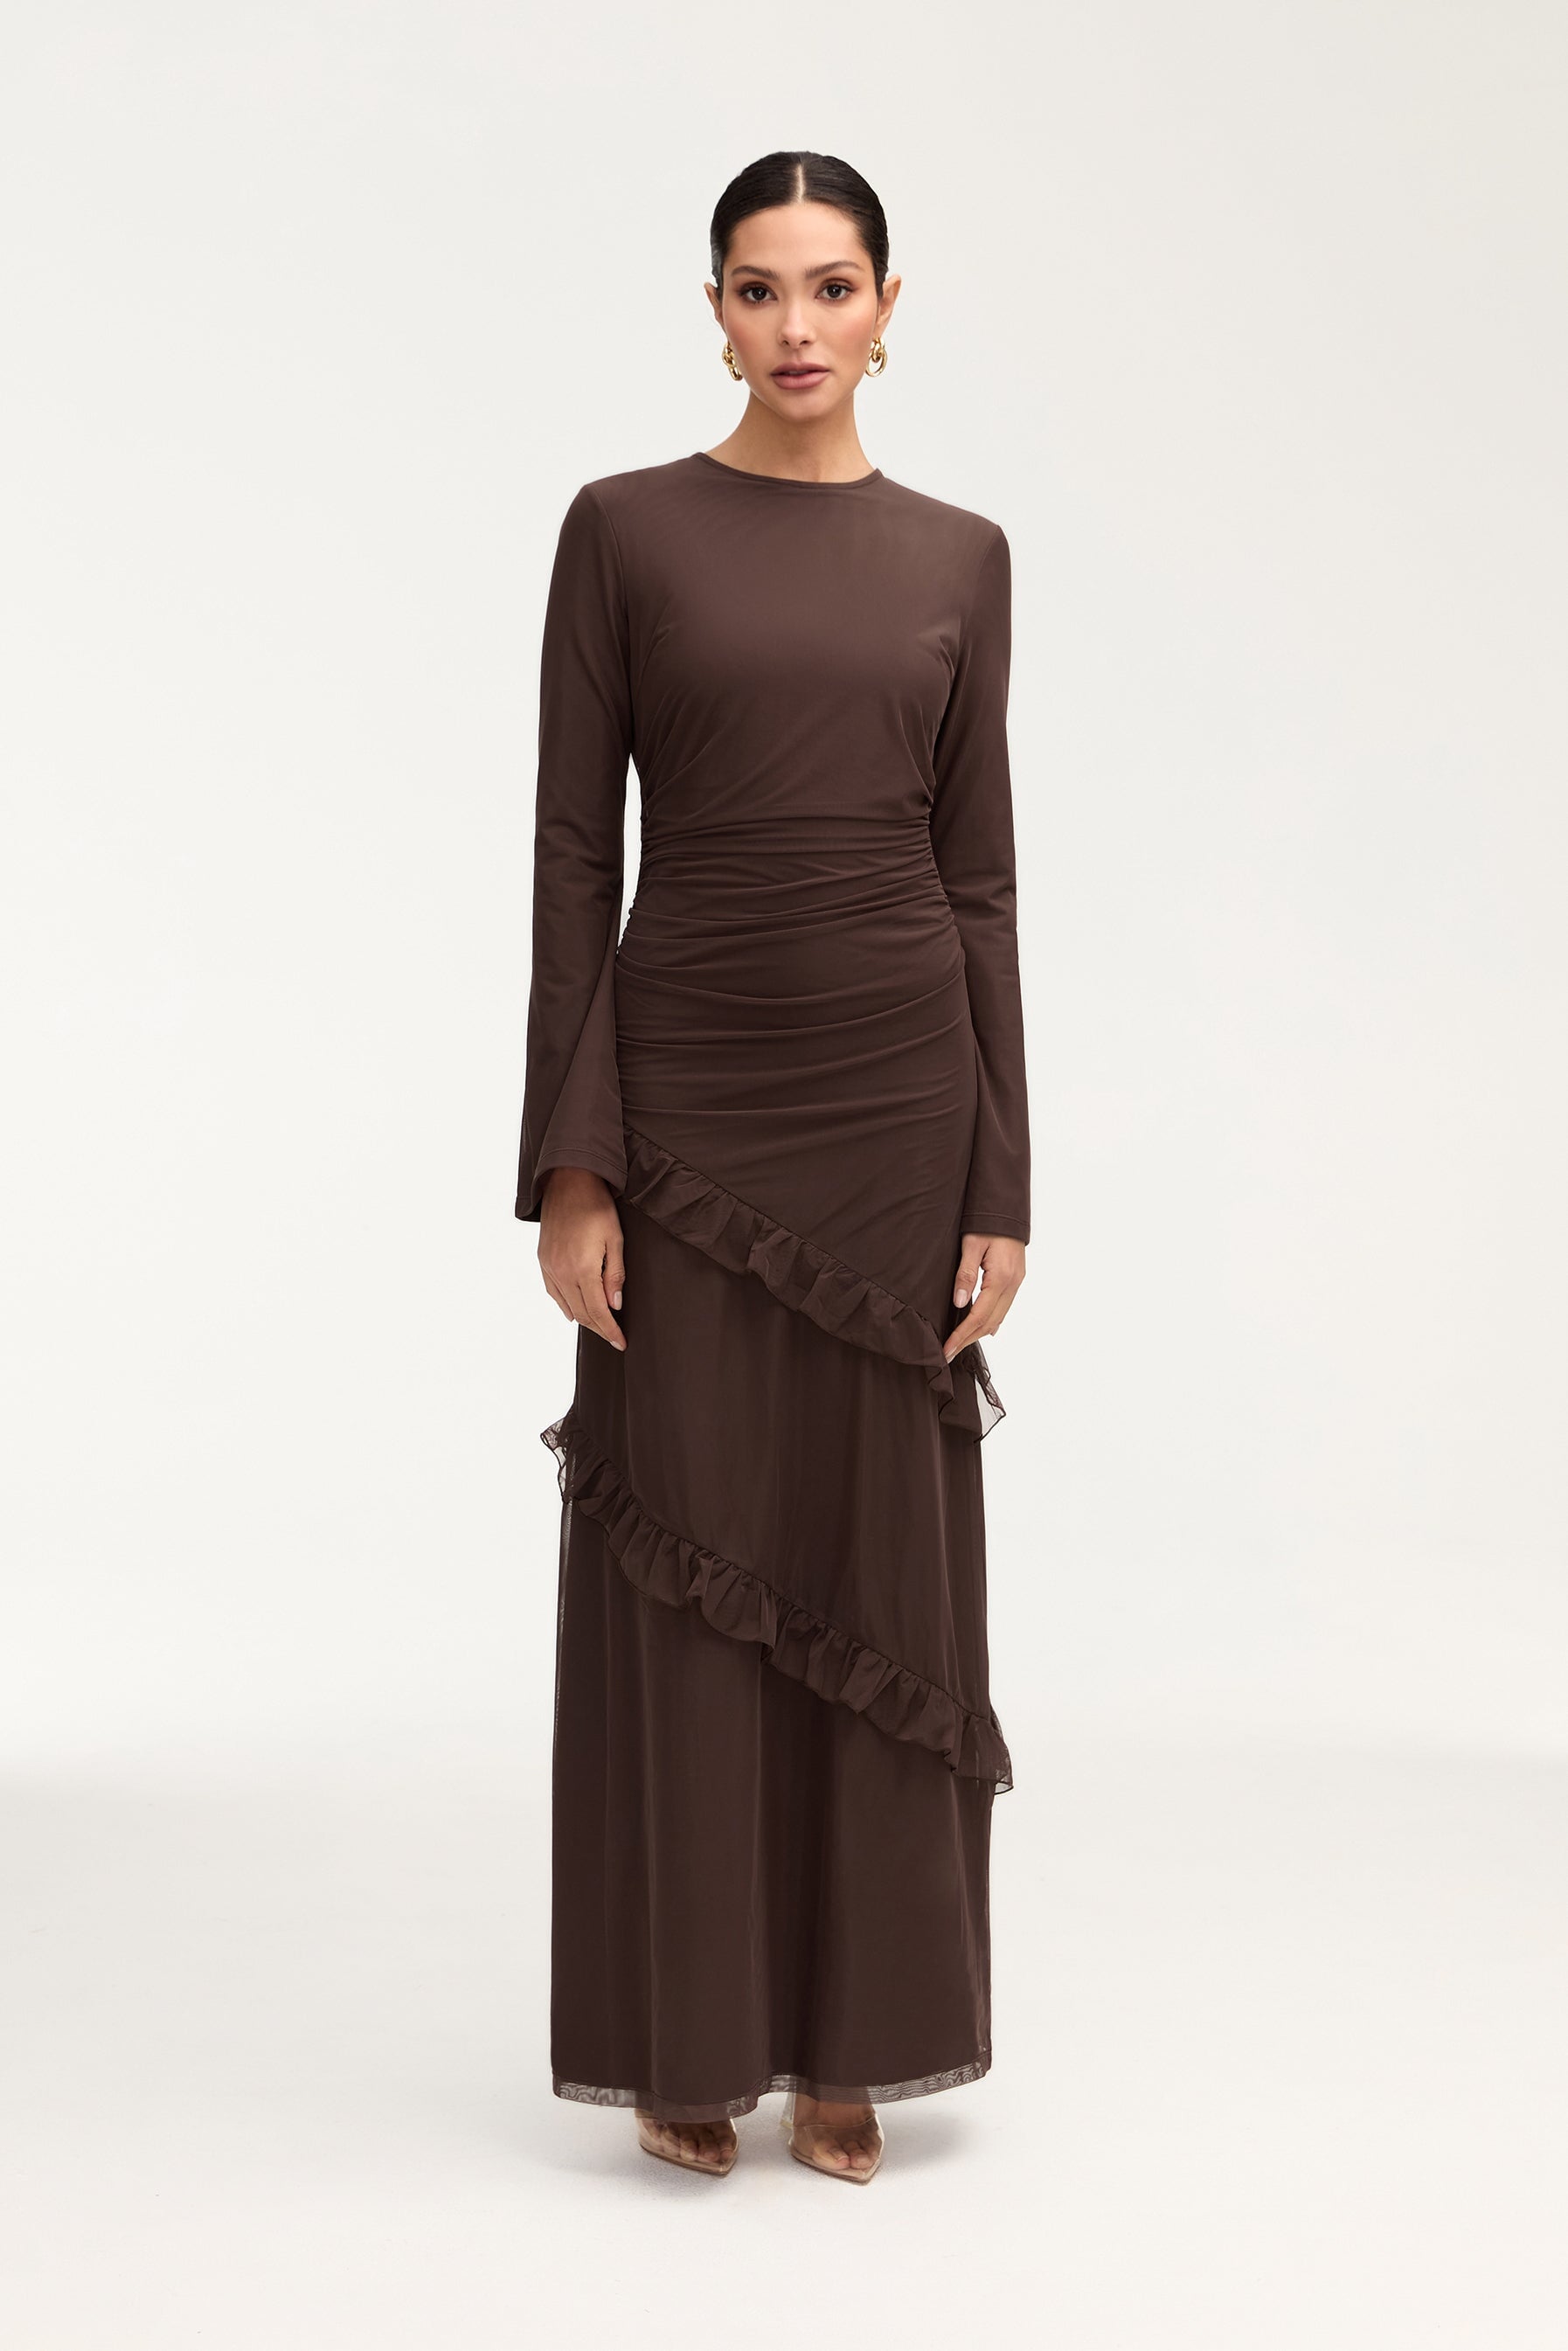 Sabrina Waterfall Mesh Maxi Dress - Espresso Clothing Veiled 